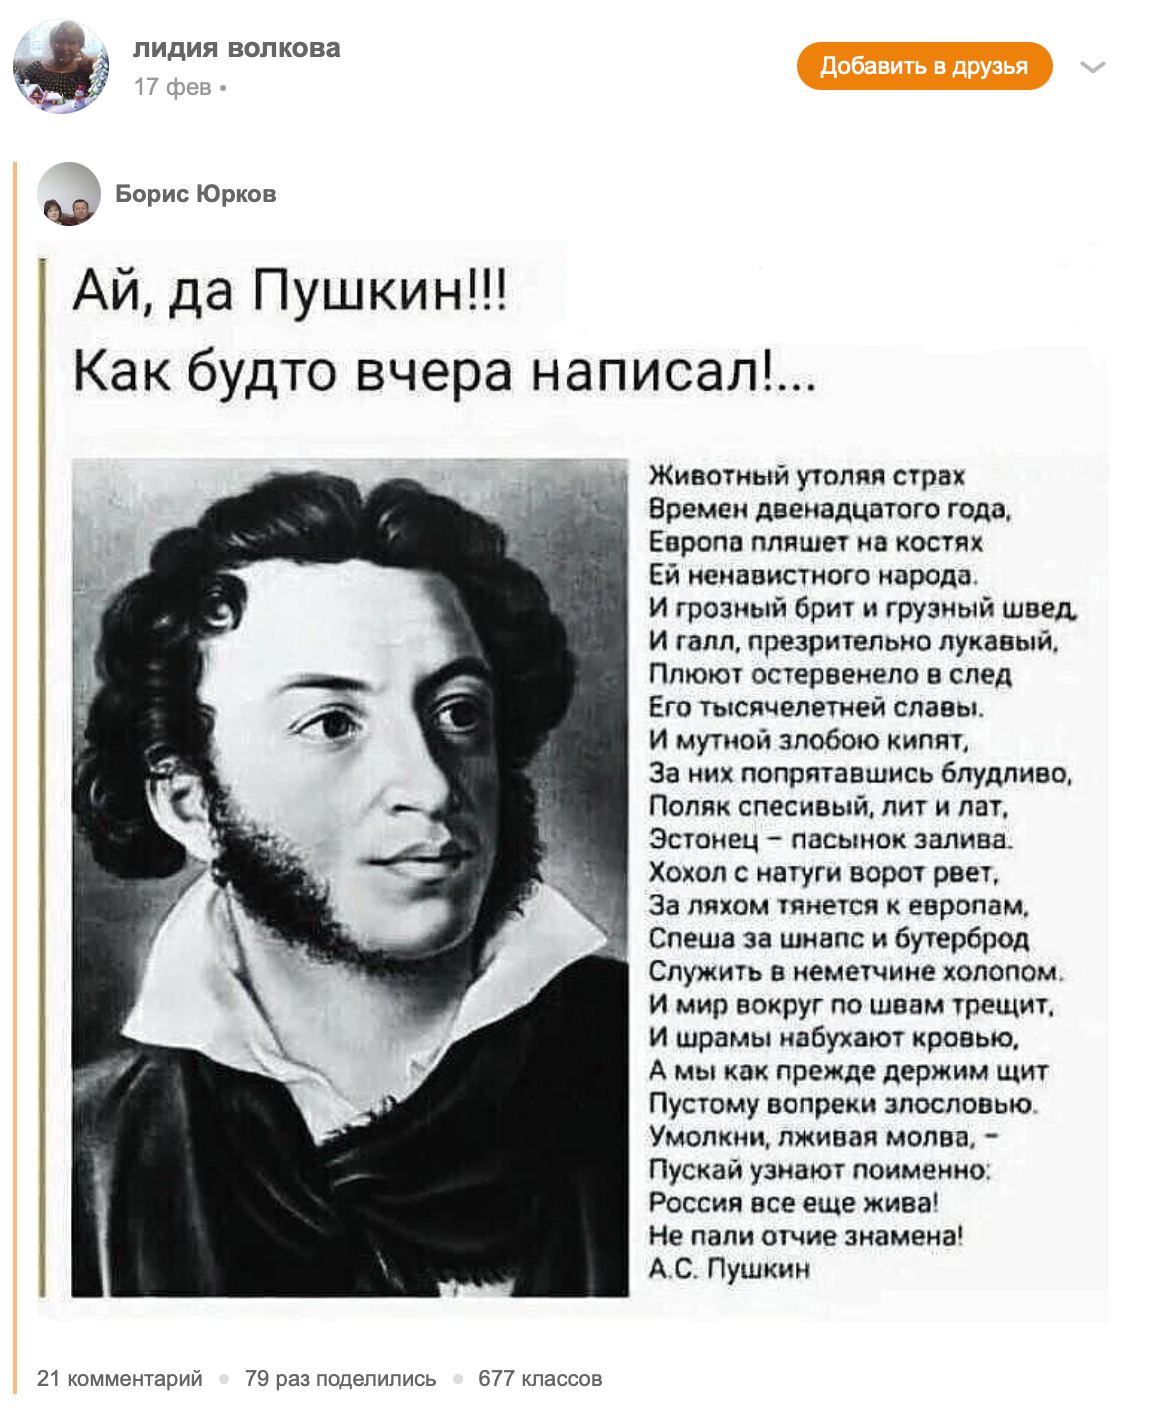 Пушкин написал стихотворение «Клеветникам России»